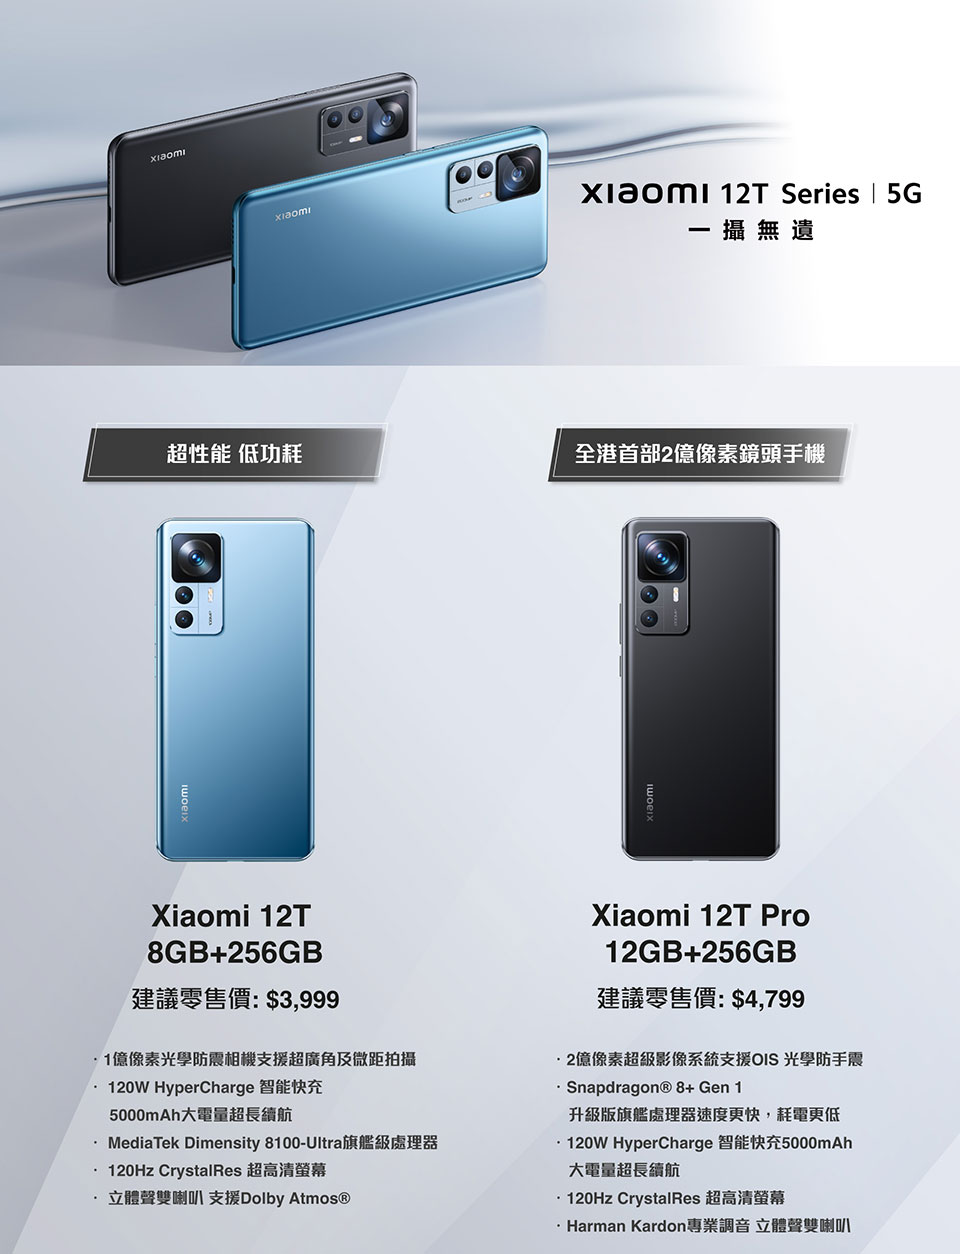 csl - Xiaomi 12 series